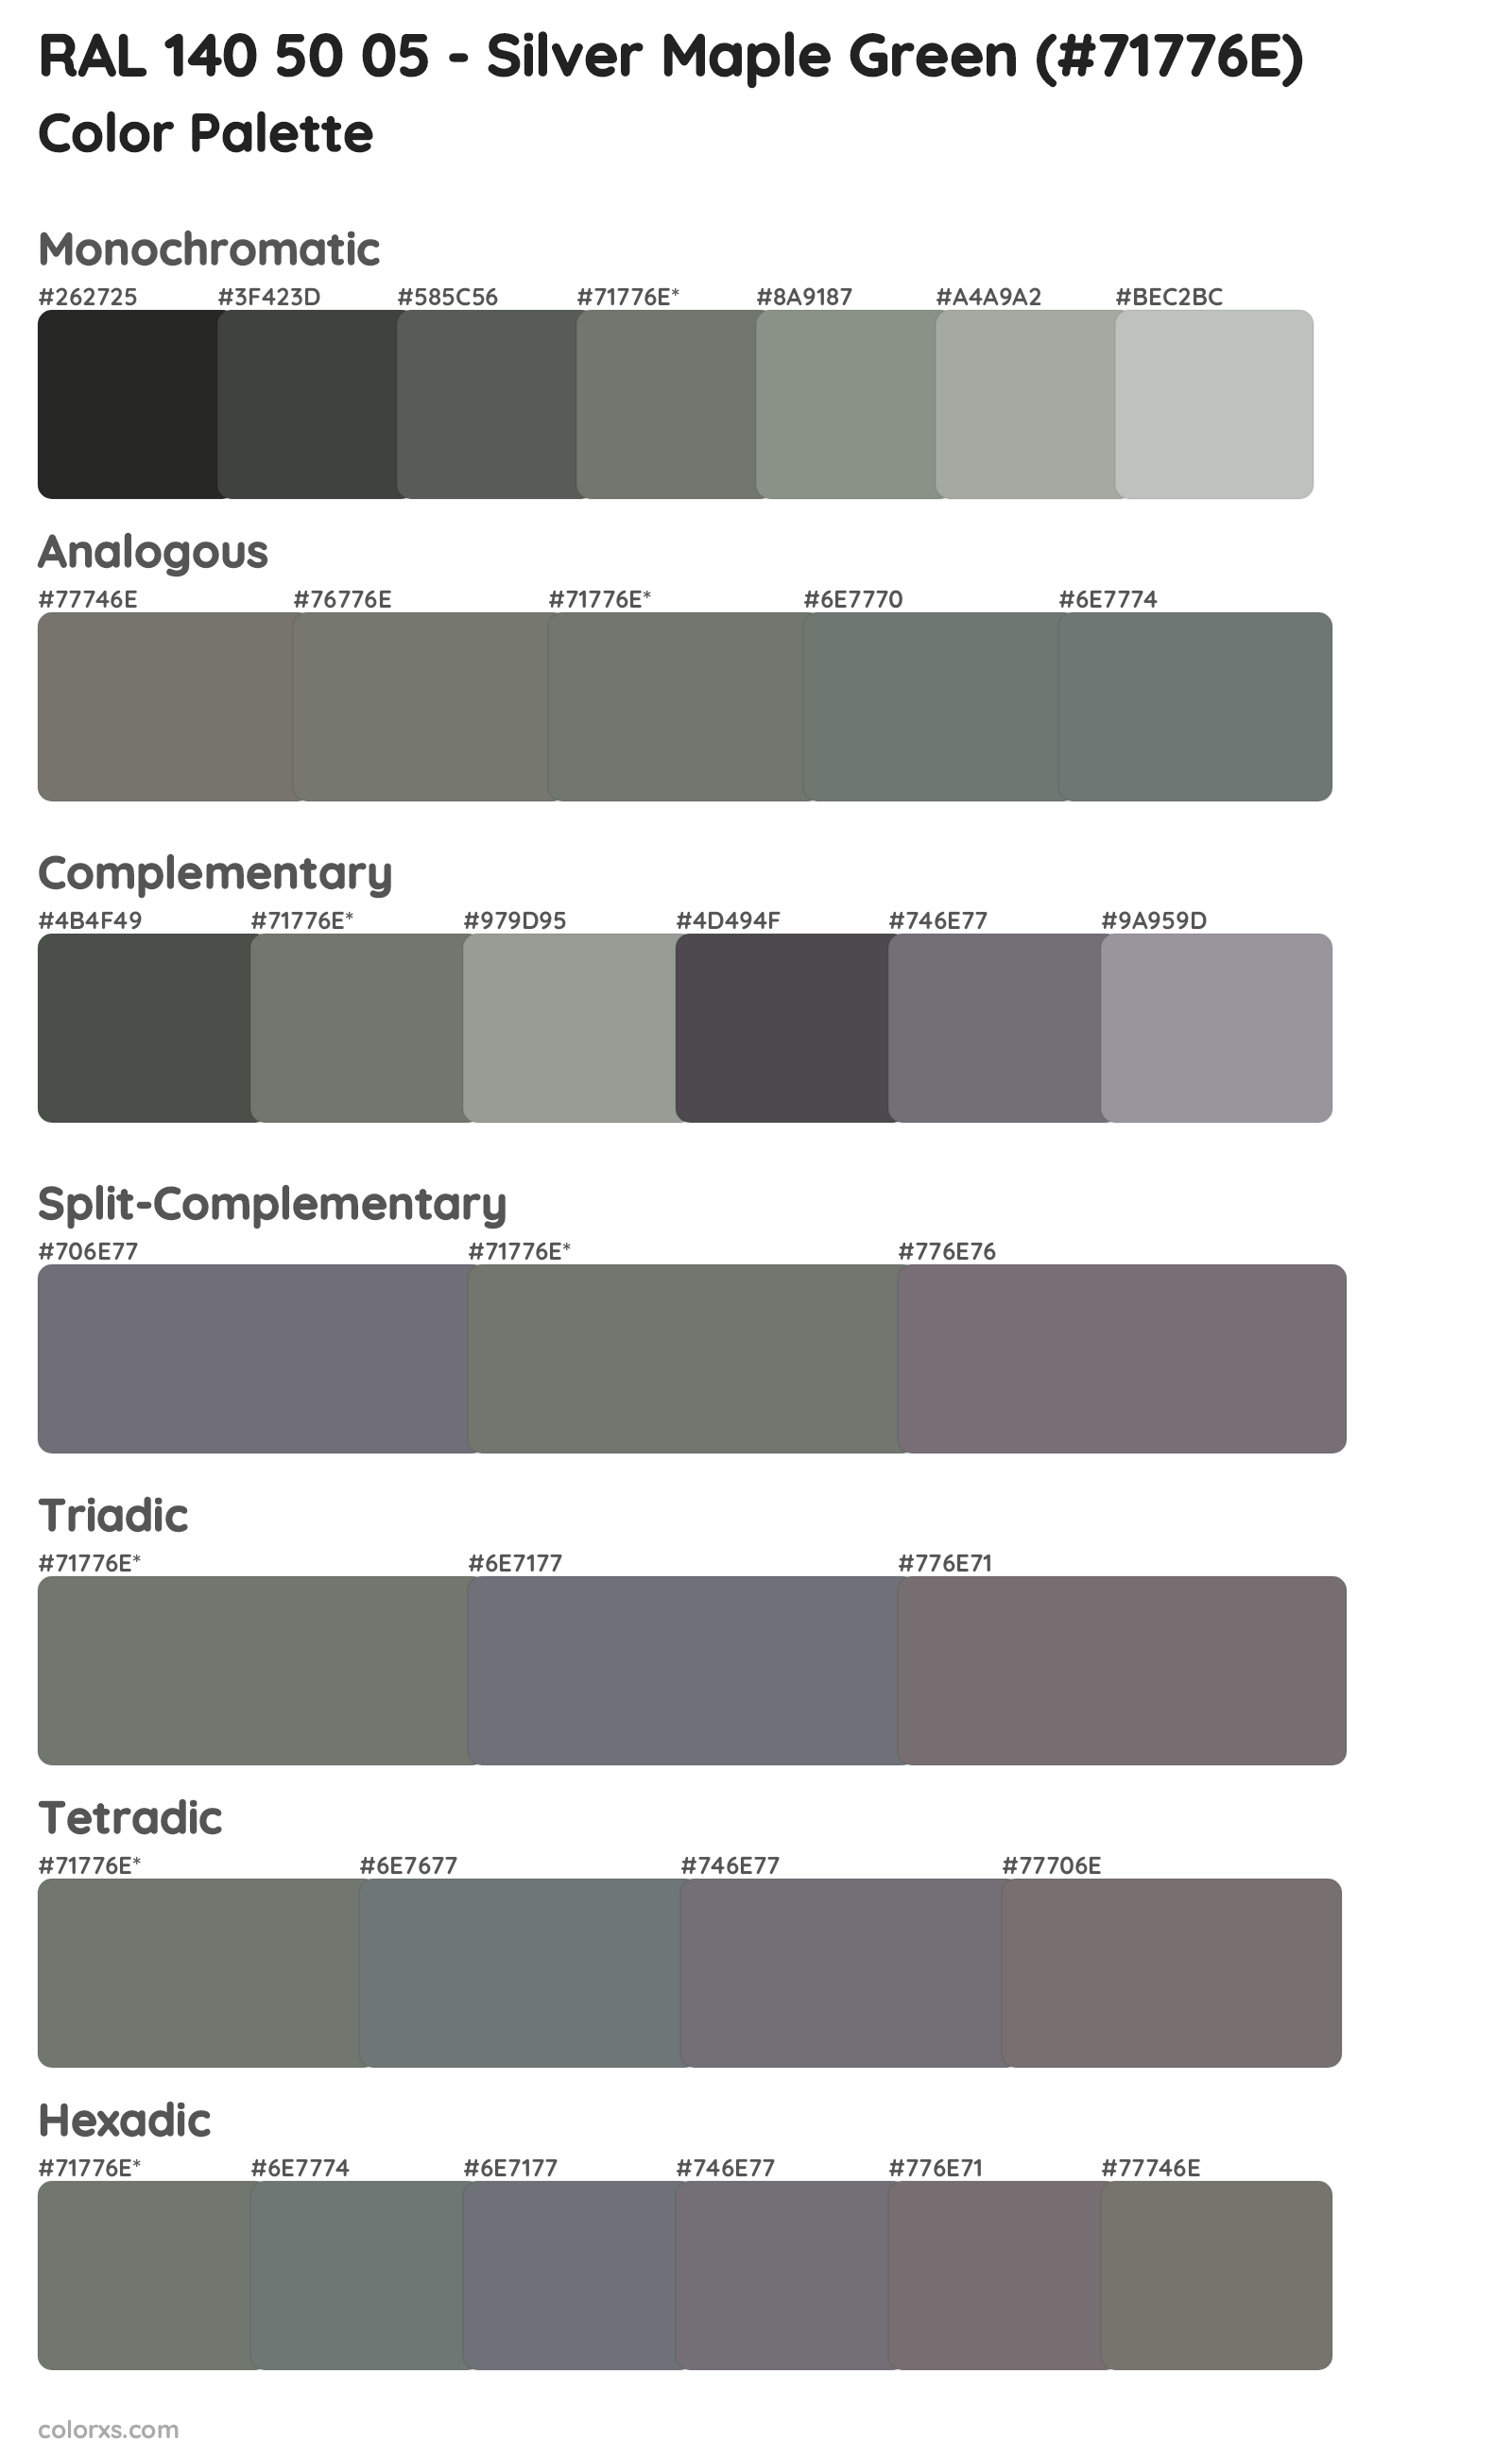 RAL 140 50 05 - Silver Maple Green Color Scheme Palettes